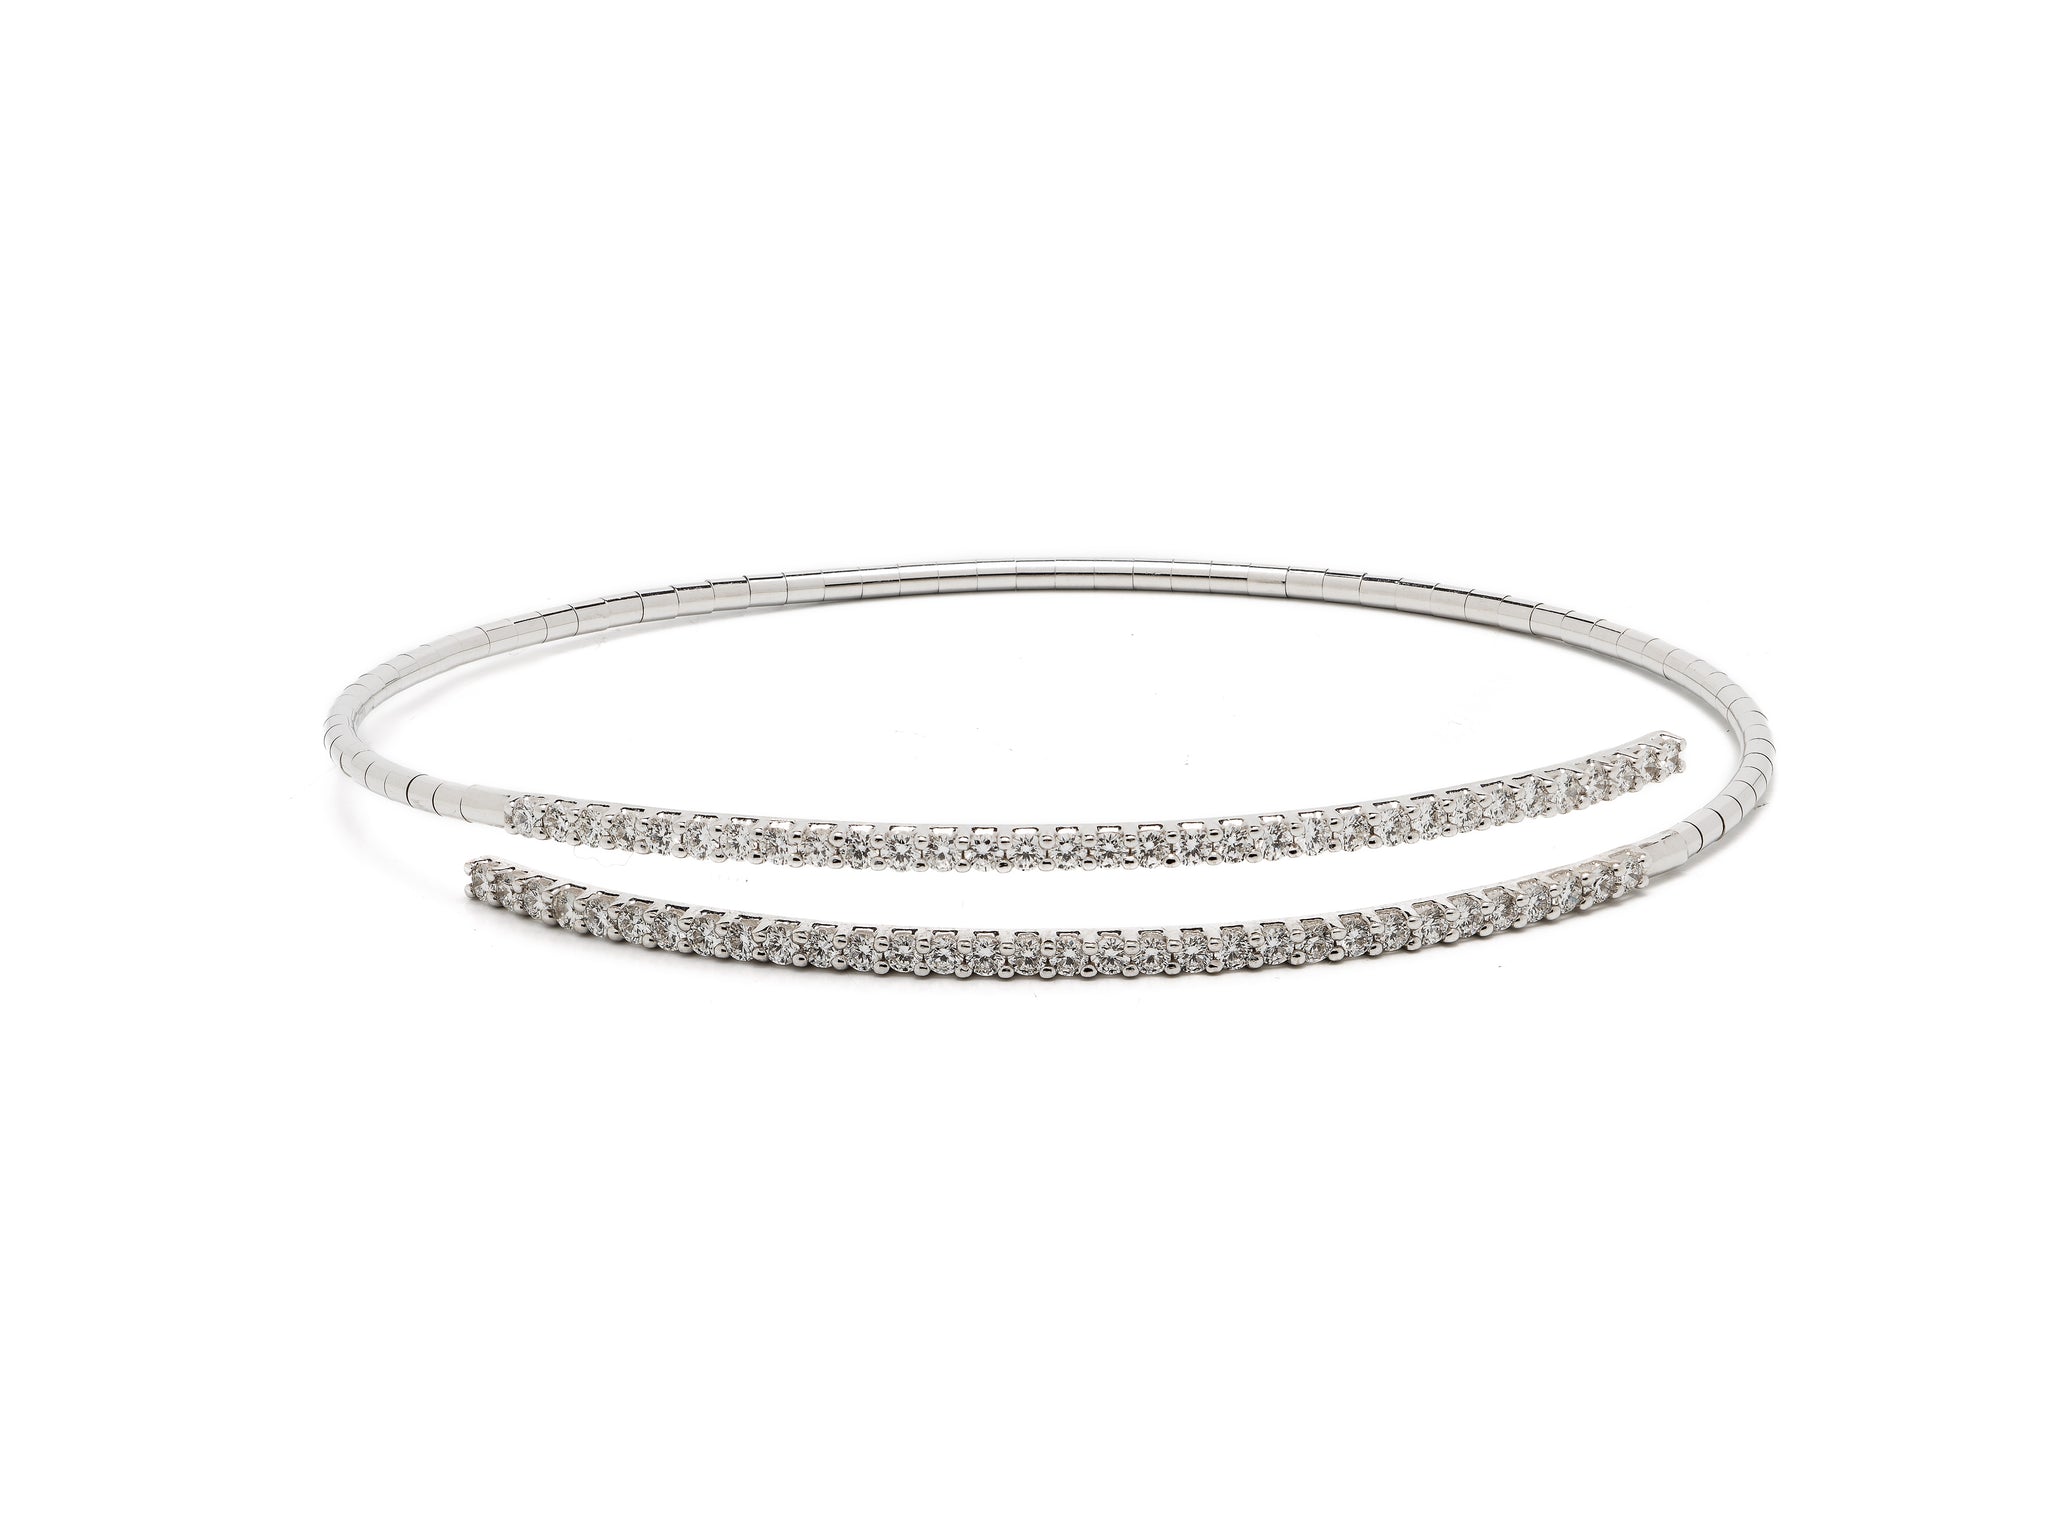 18 krt white gold spiral bracelet set with 68 brilliant diamonds